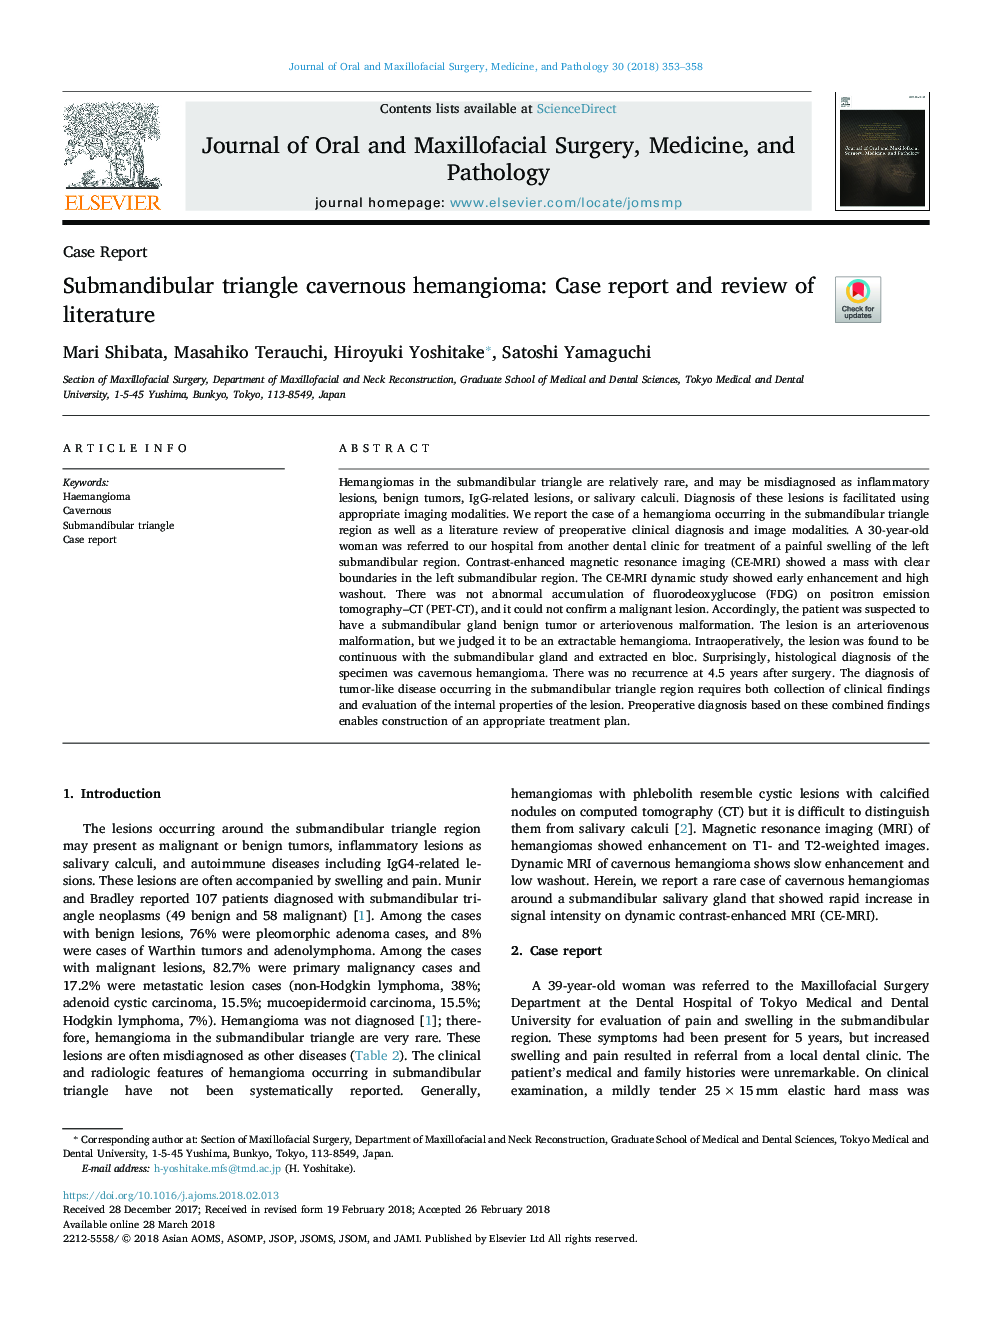 Submandibular triangle cavernous hemangioma: Case report and review of literature